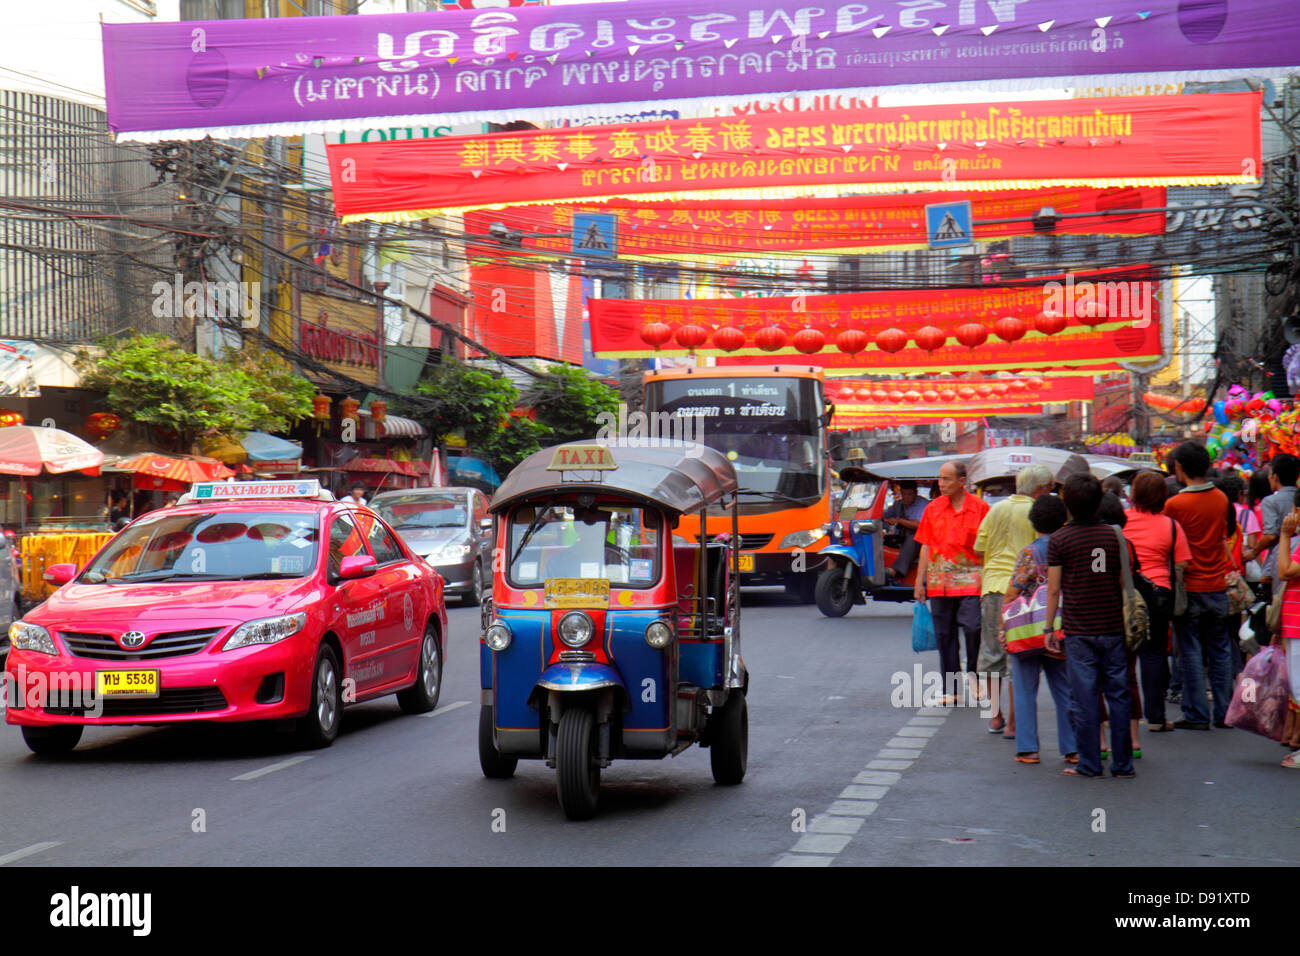 Bangkok Thaïlande,Thai,Samphanthawong,Chinatown,Yaowarat Road,trafic,taxi,auto rickshaw,tuk-tuk,sam-lor,bus,bus,bus,taxis,taxi,taxis,taxis,bus,bus,bus,banners,Chi Banque D'Images